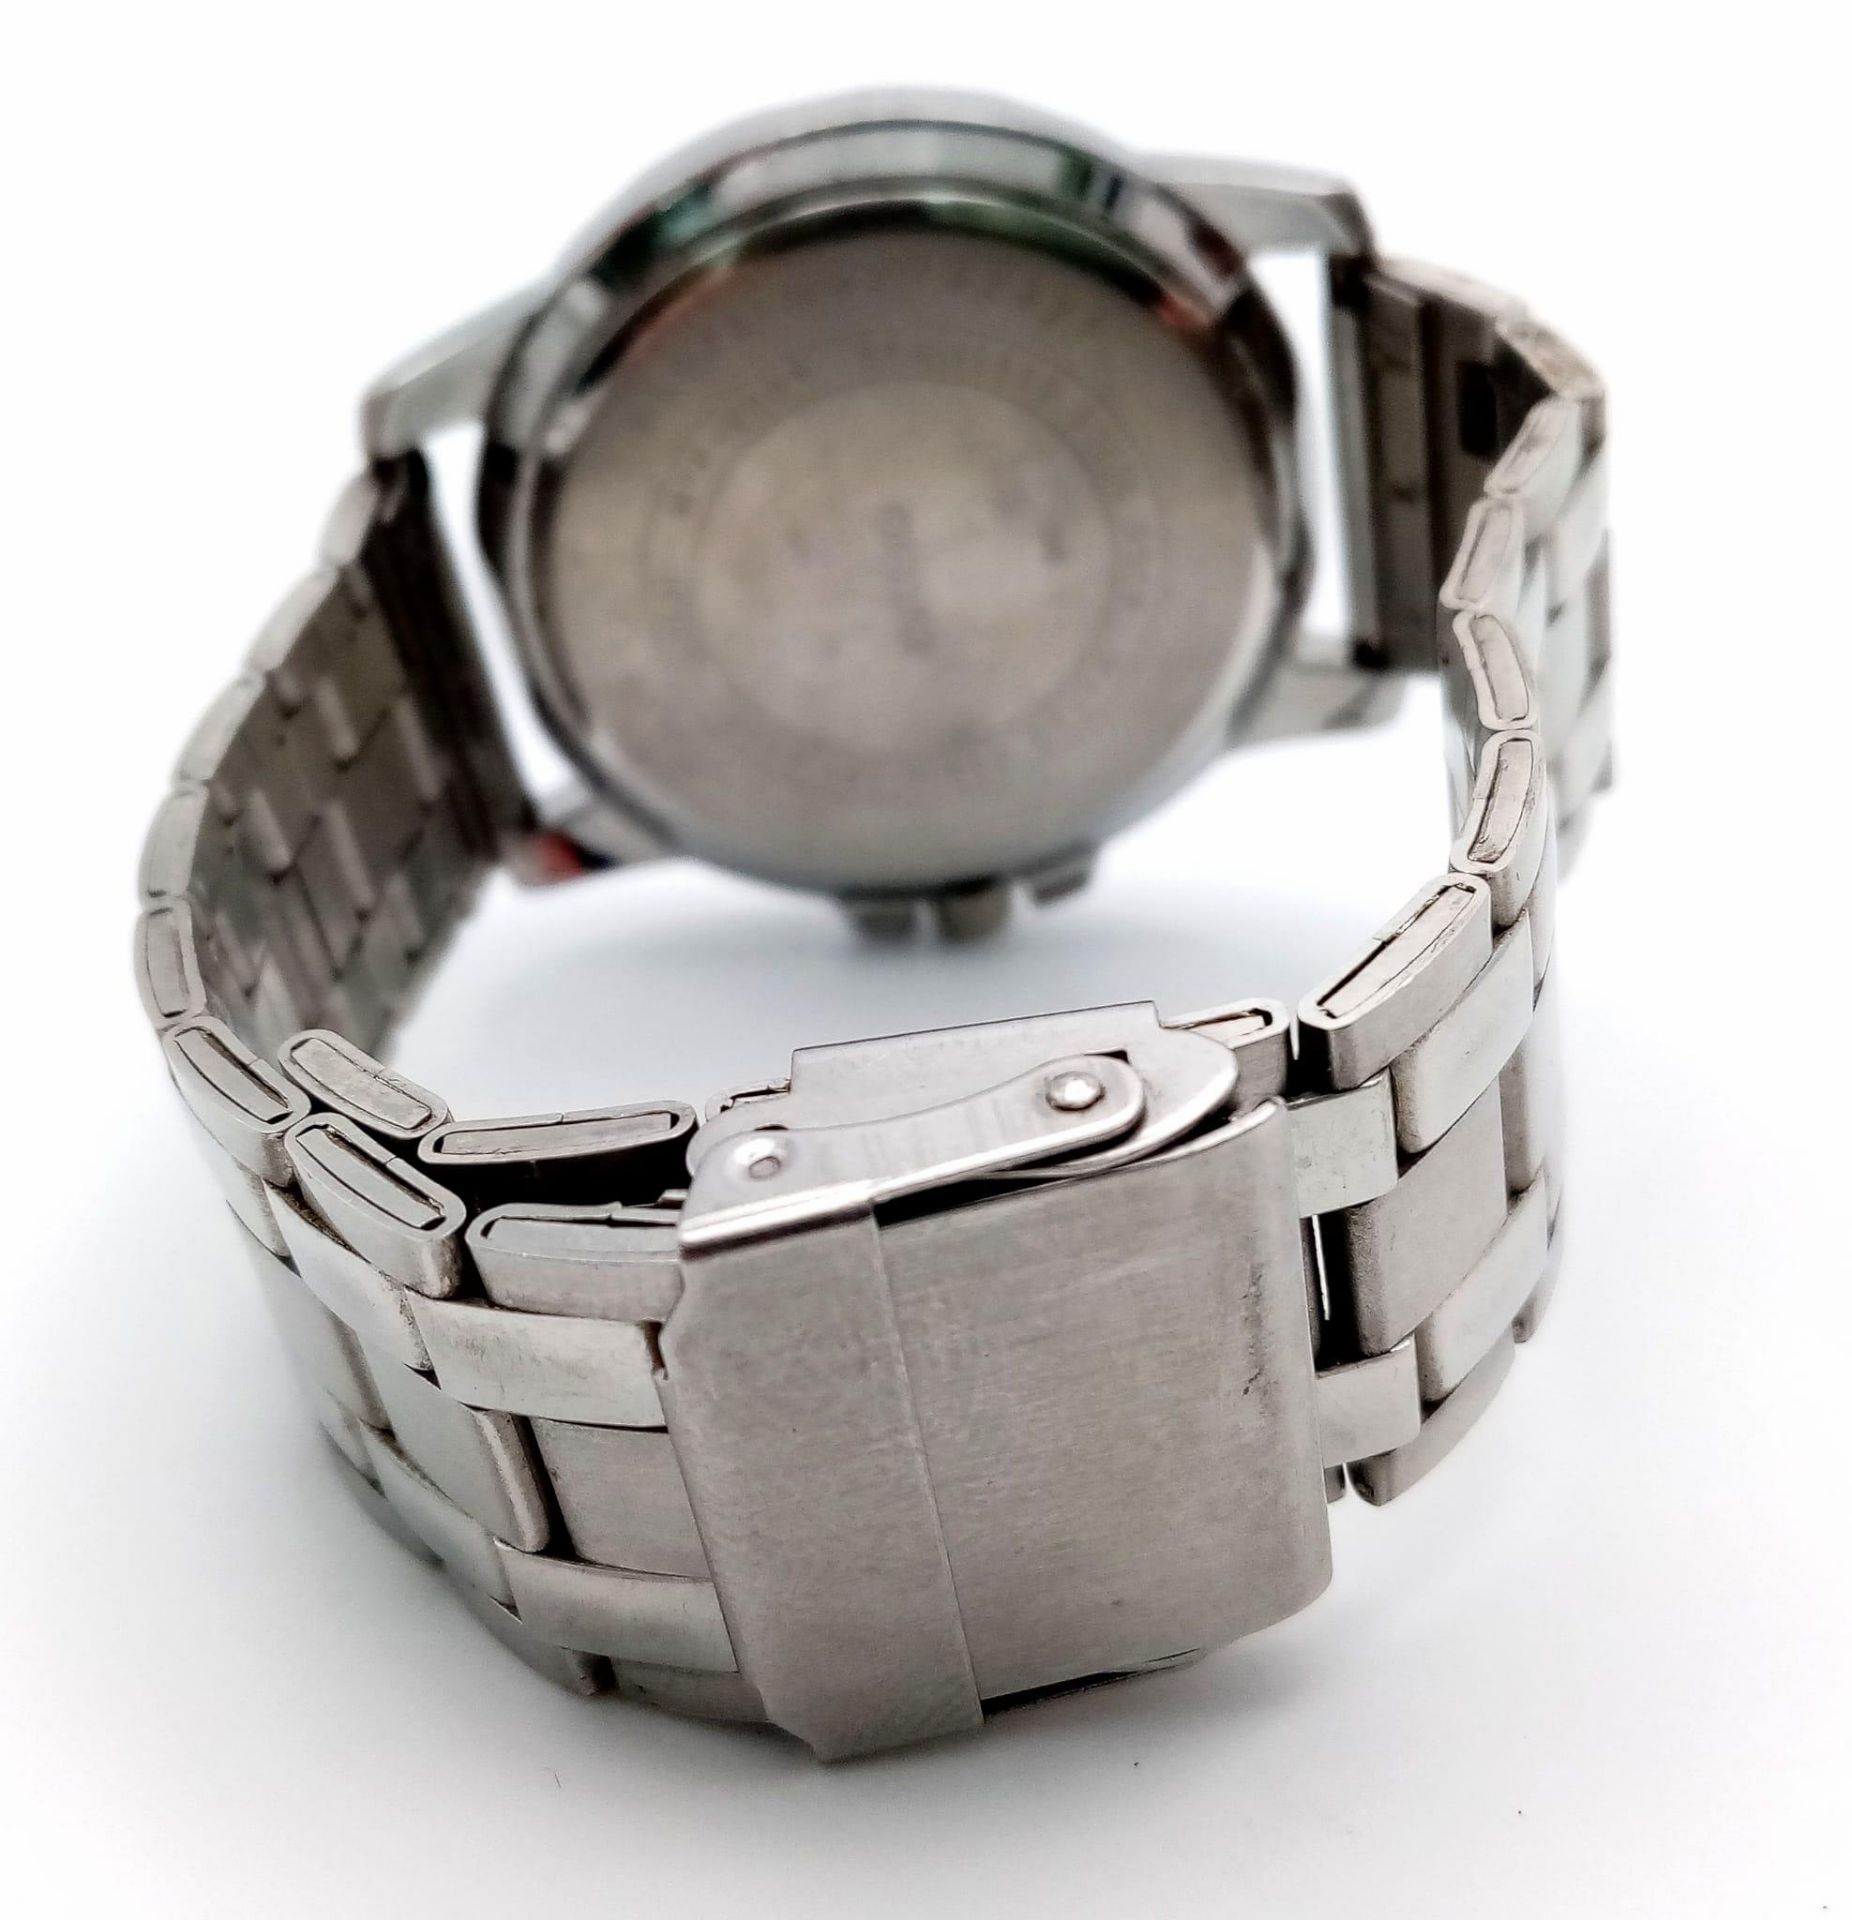 A Casio Quartz Gents Watch. Stainless steel bracelet and case - 44mm. Black dial with date window. - Bild 5 aus 6